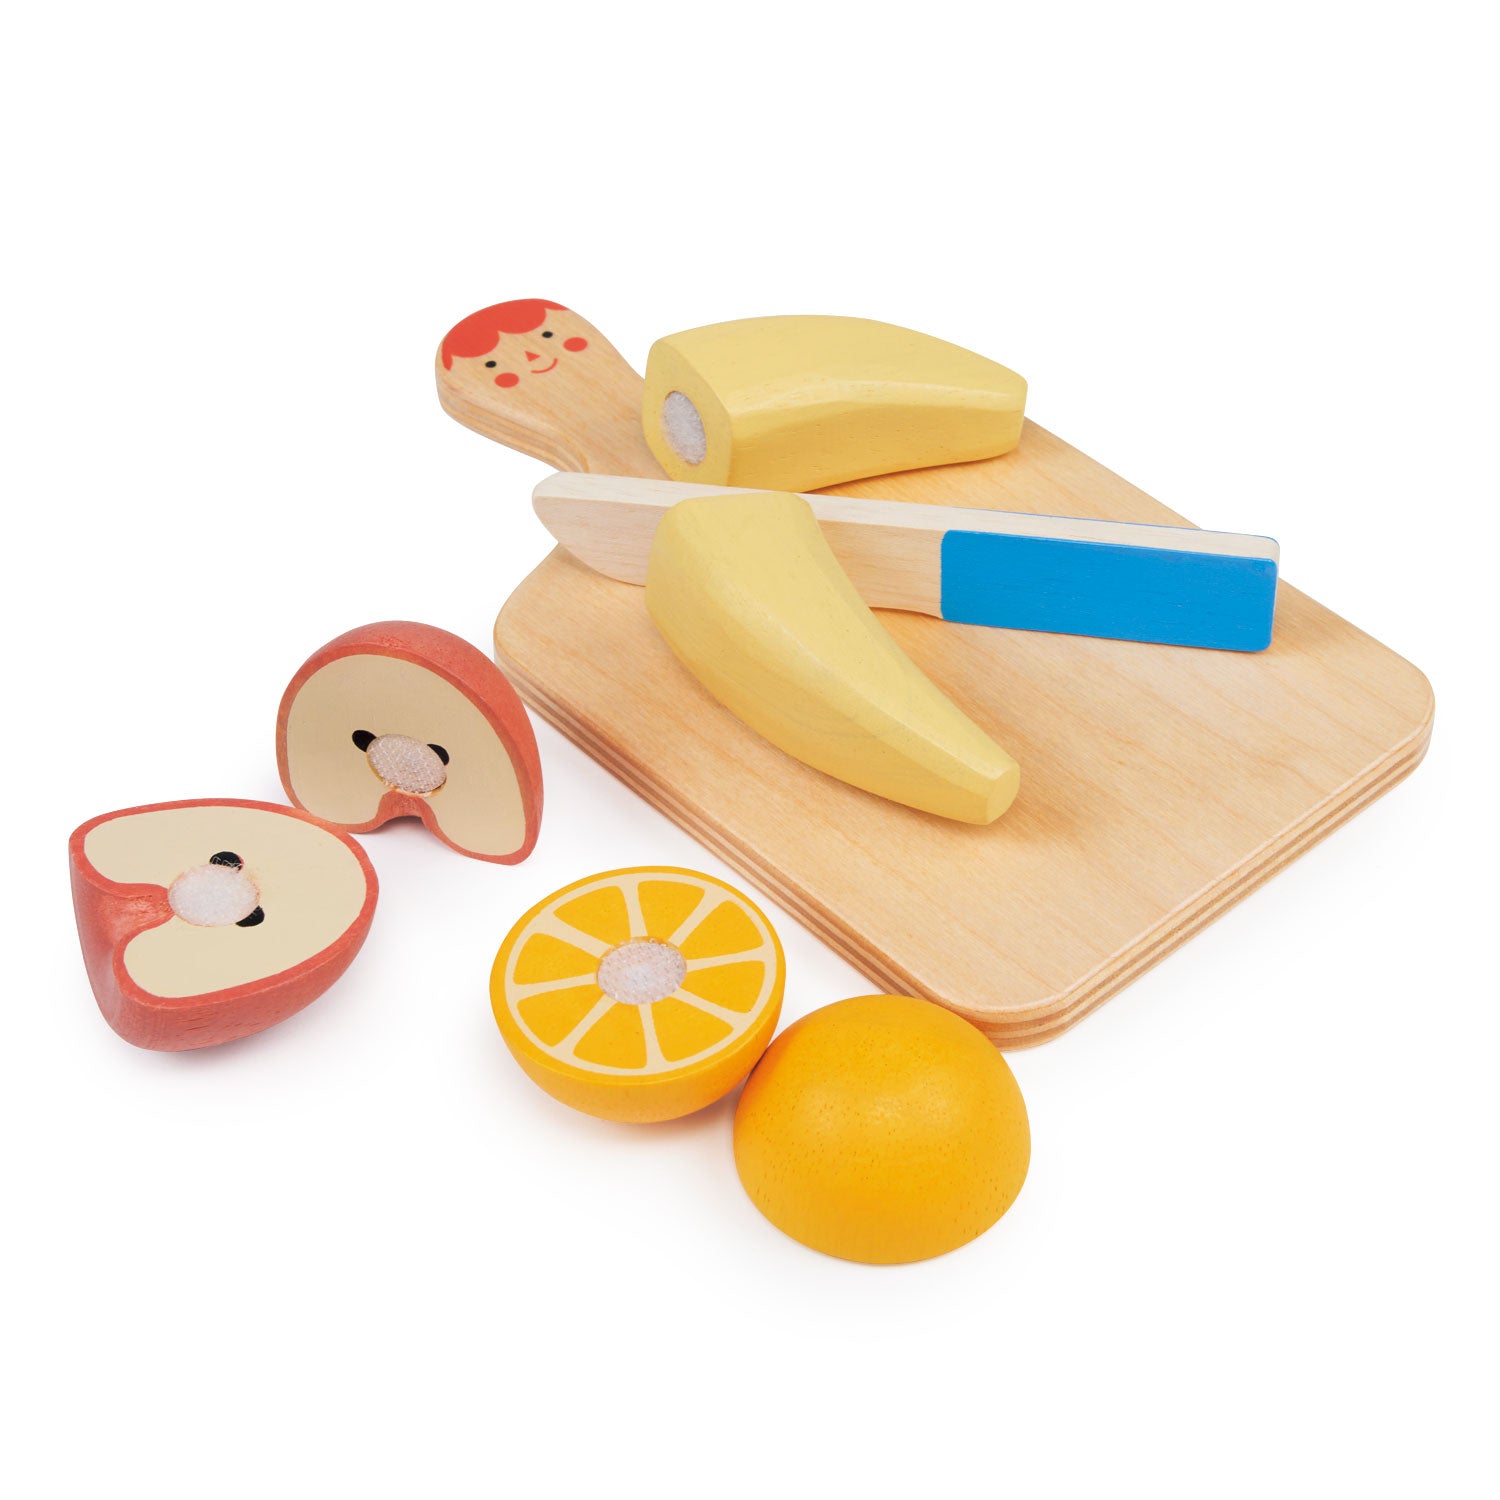 Mentari wooden chopping board, apple, orange and banana